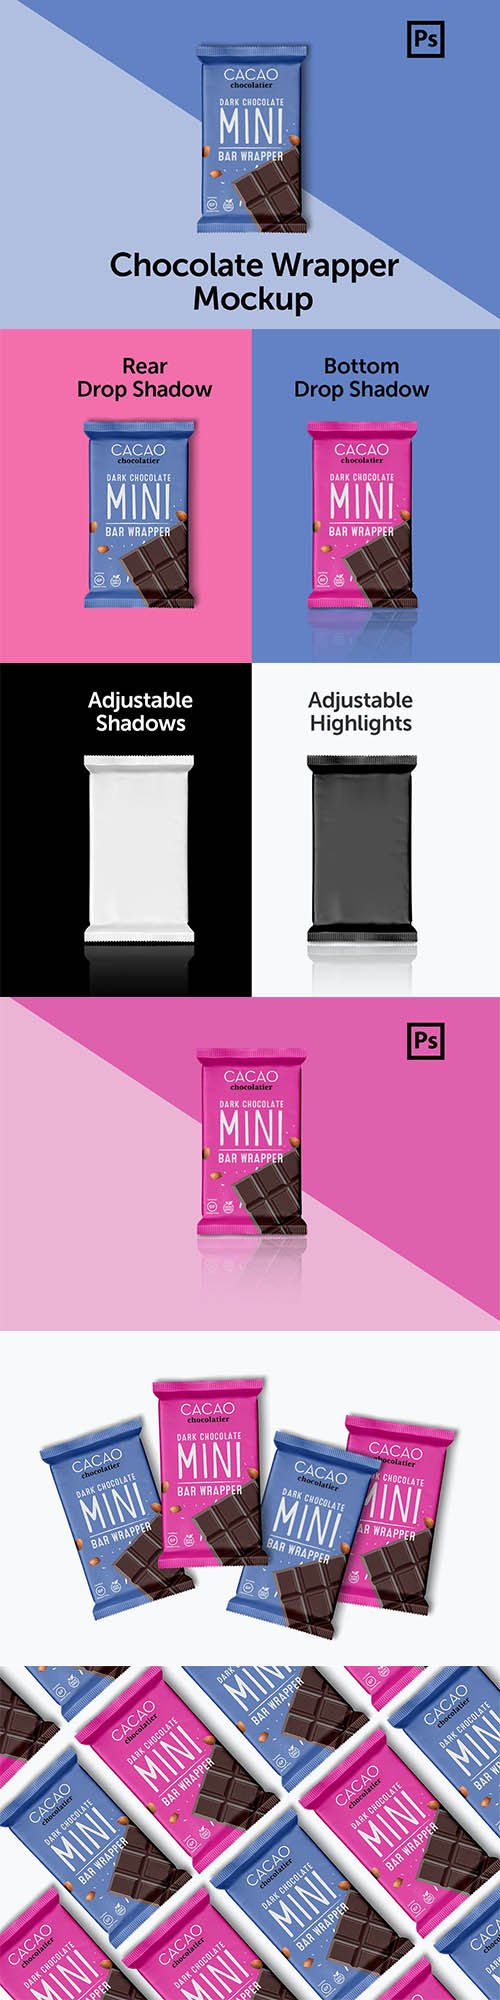 Mini Chocolate Wrapper Mockup 3653302